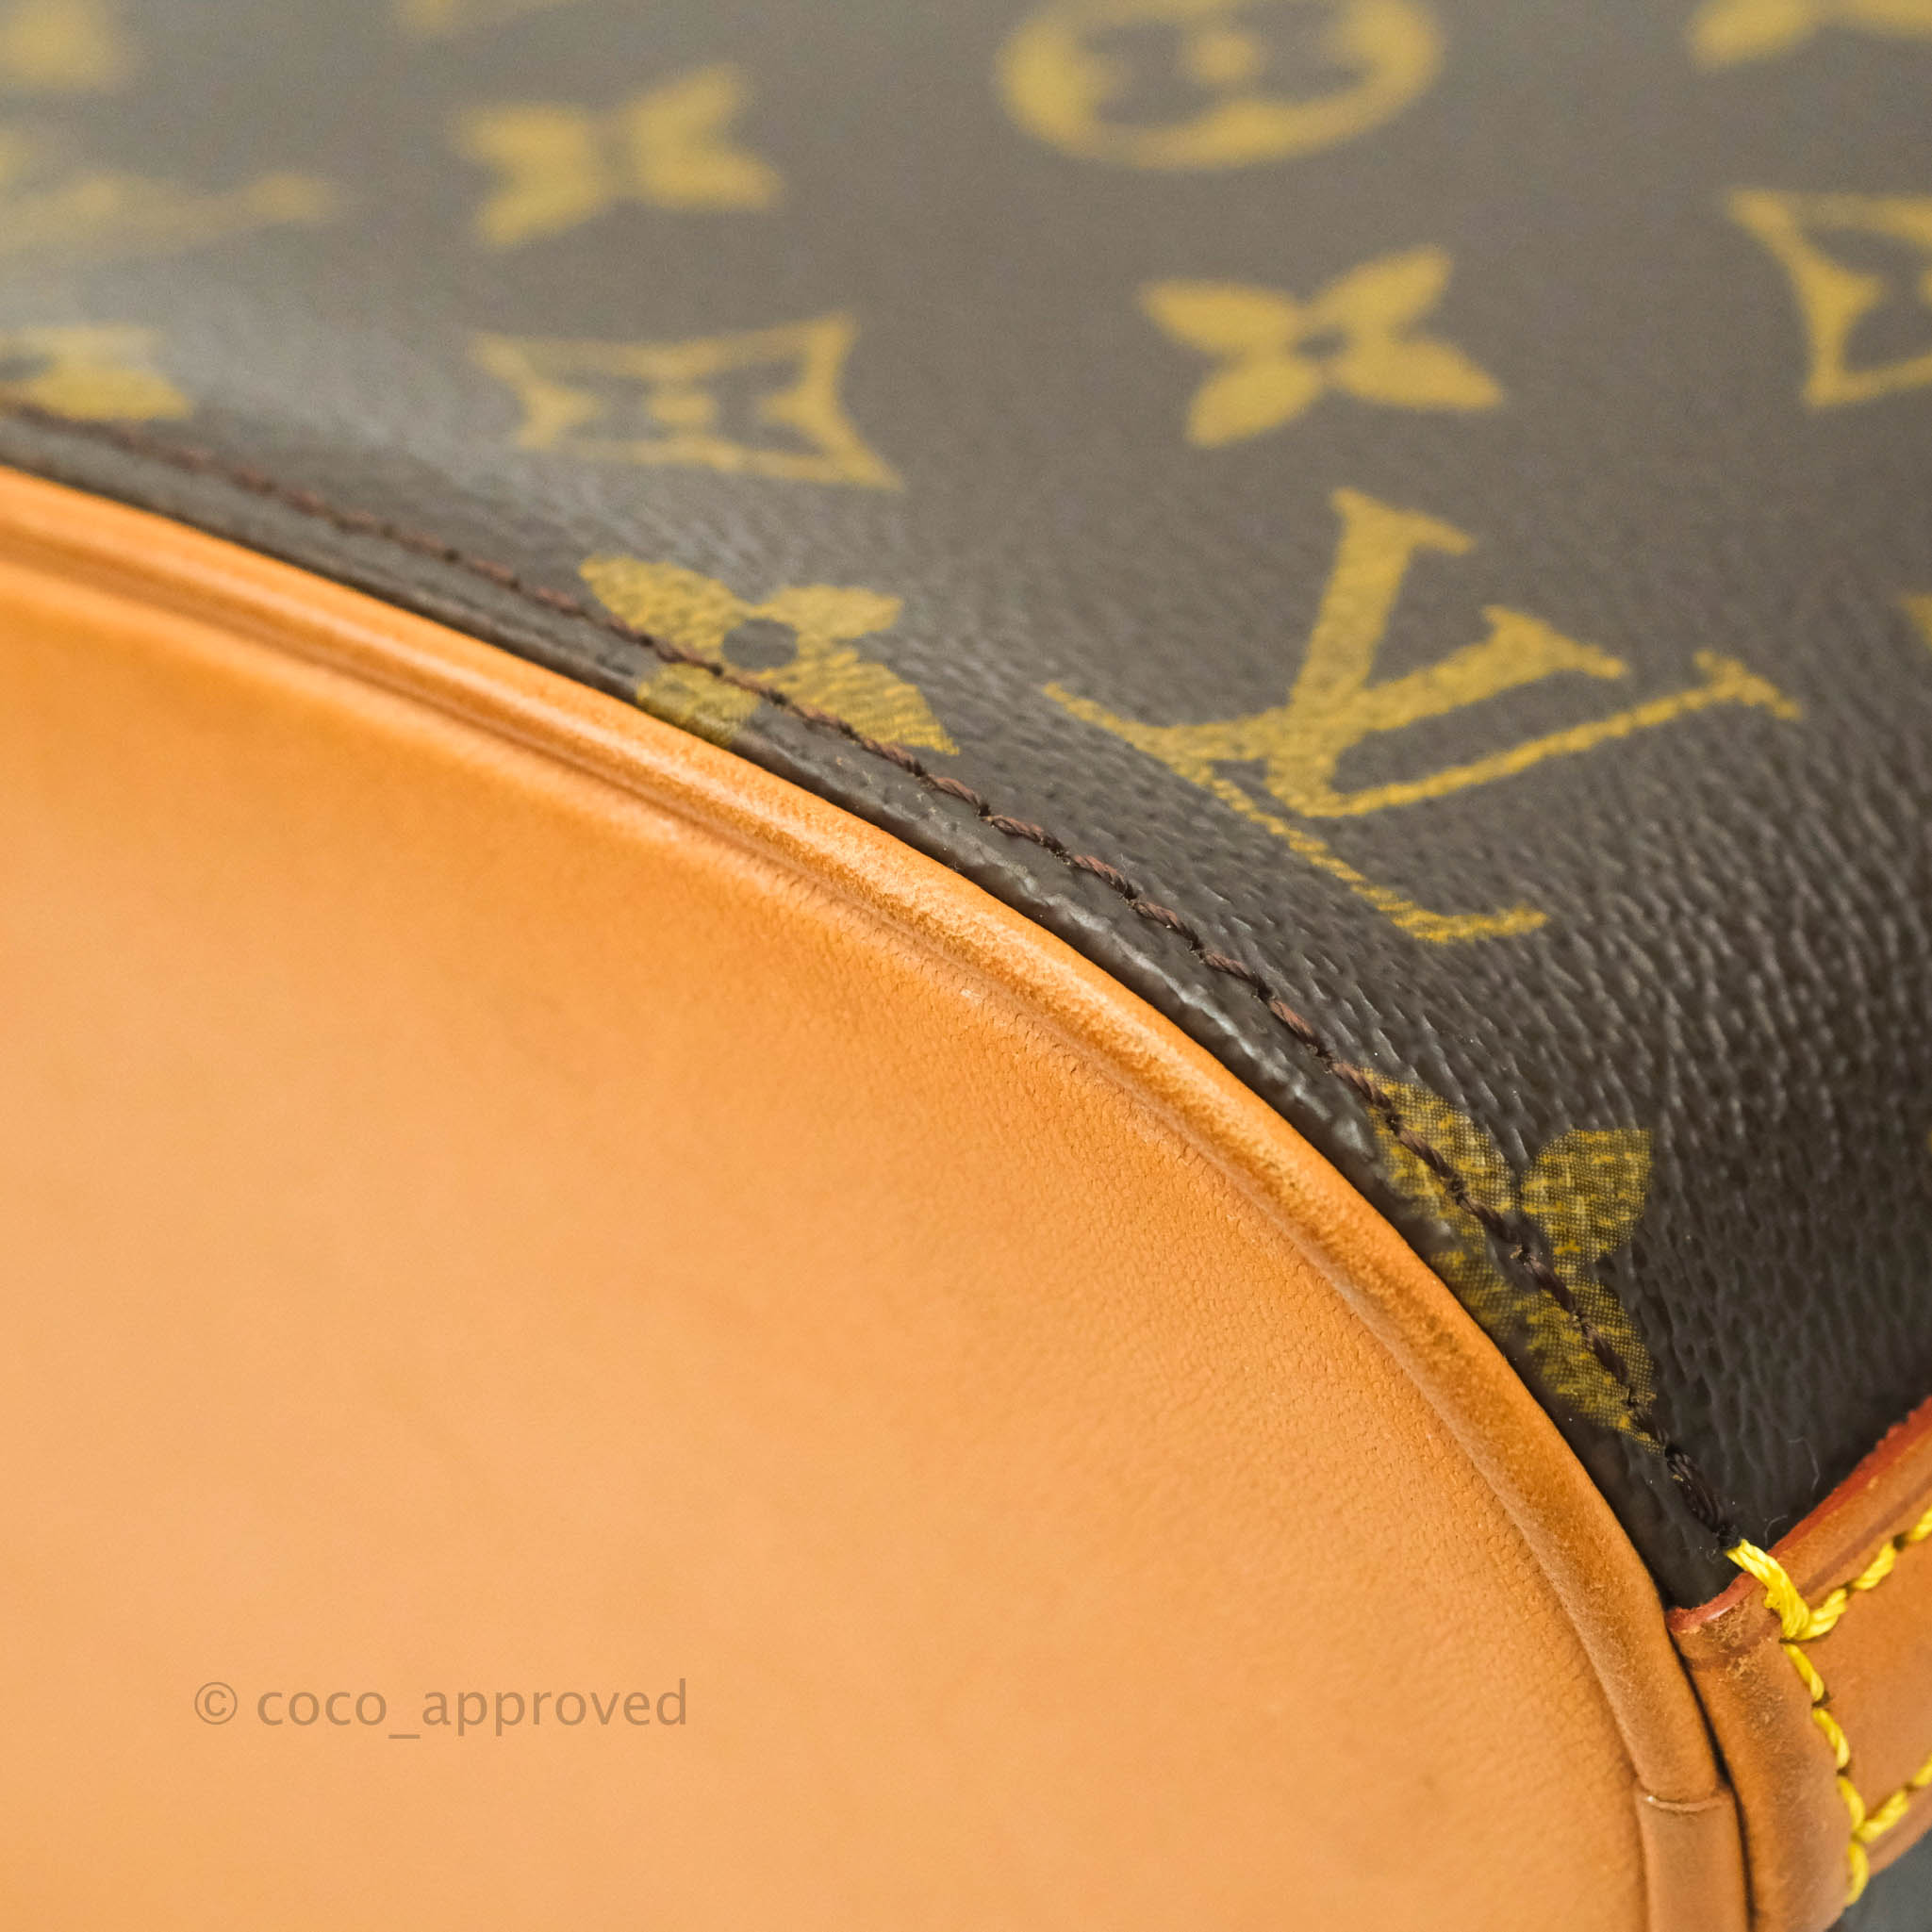 Louis Vuitton Drouot Handbag Monogram Canvas - ShopStyle Crossbody